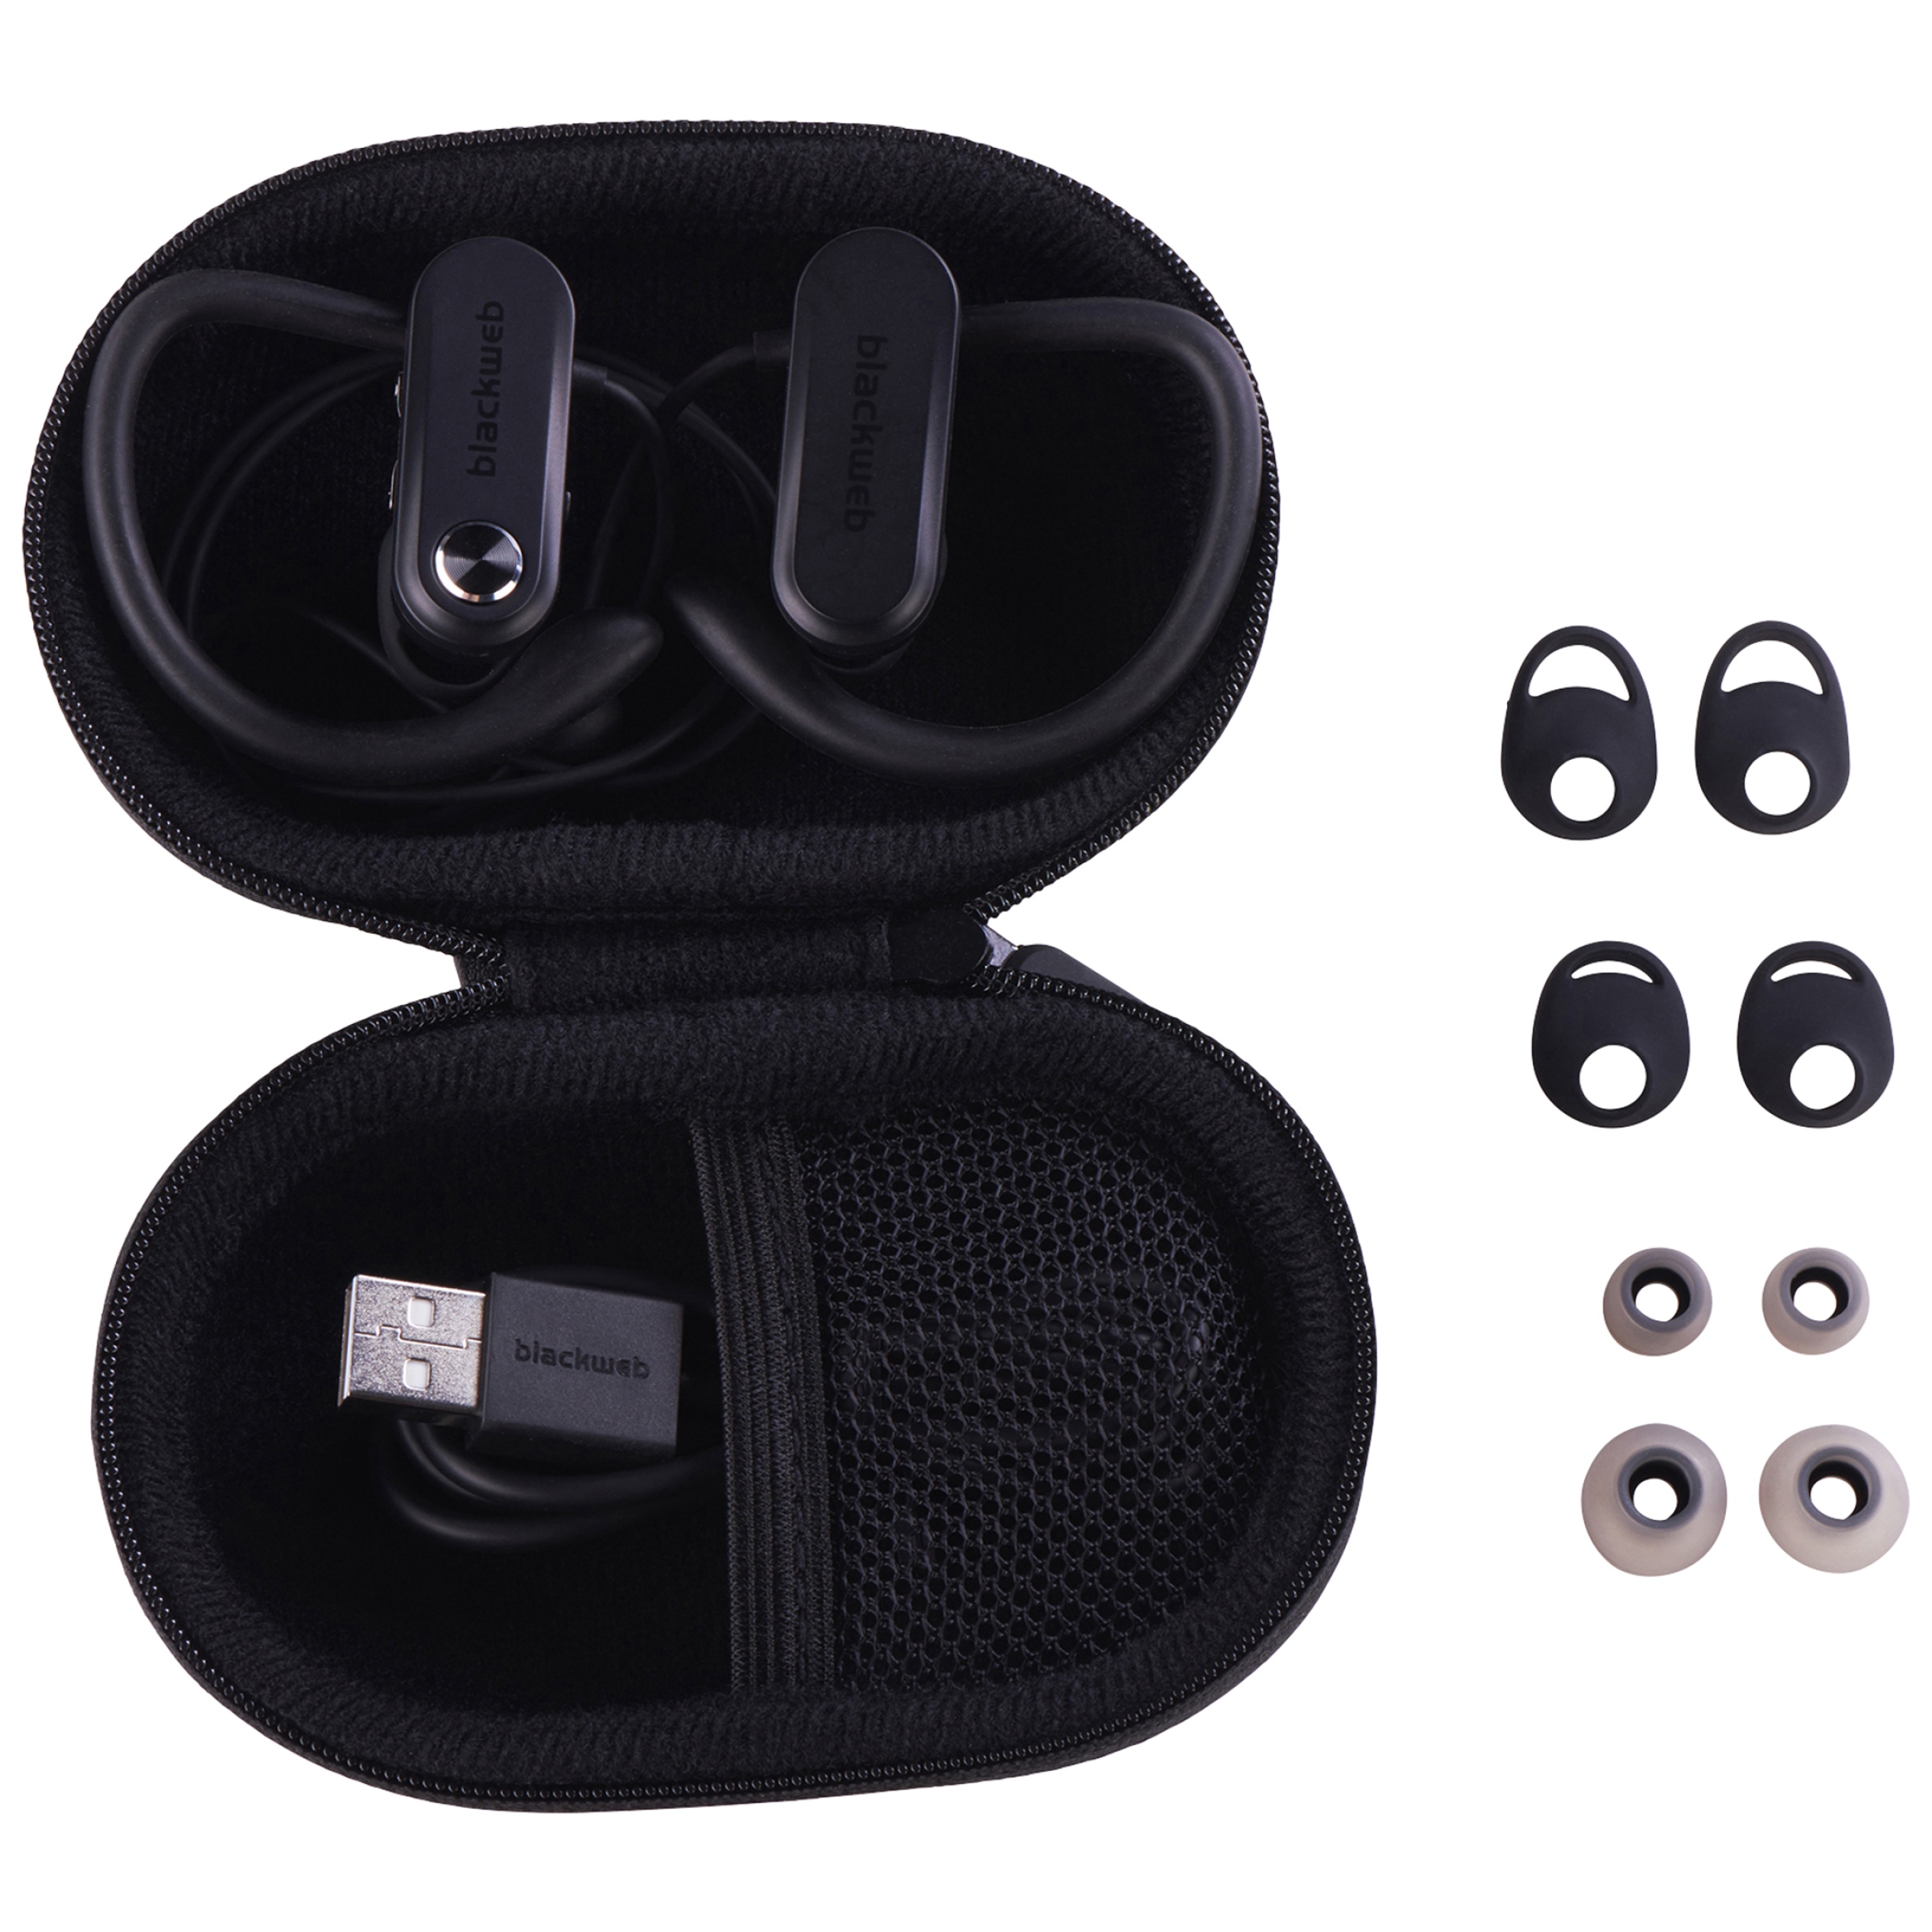 Blackweb Wireless Bluetooth Sport Earbuds, Black - image 4 of 6